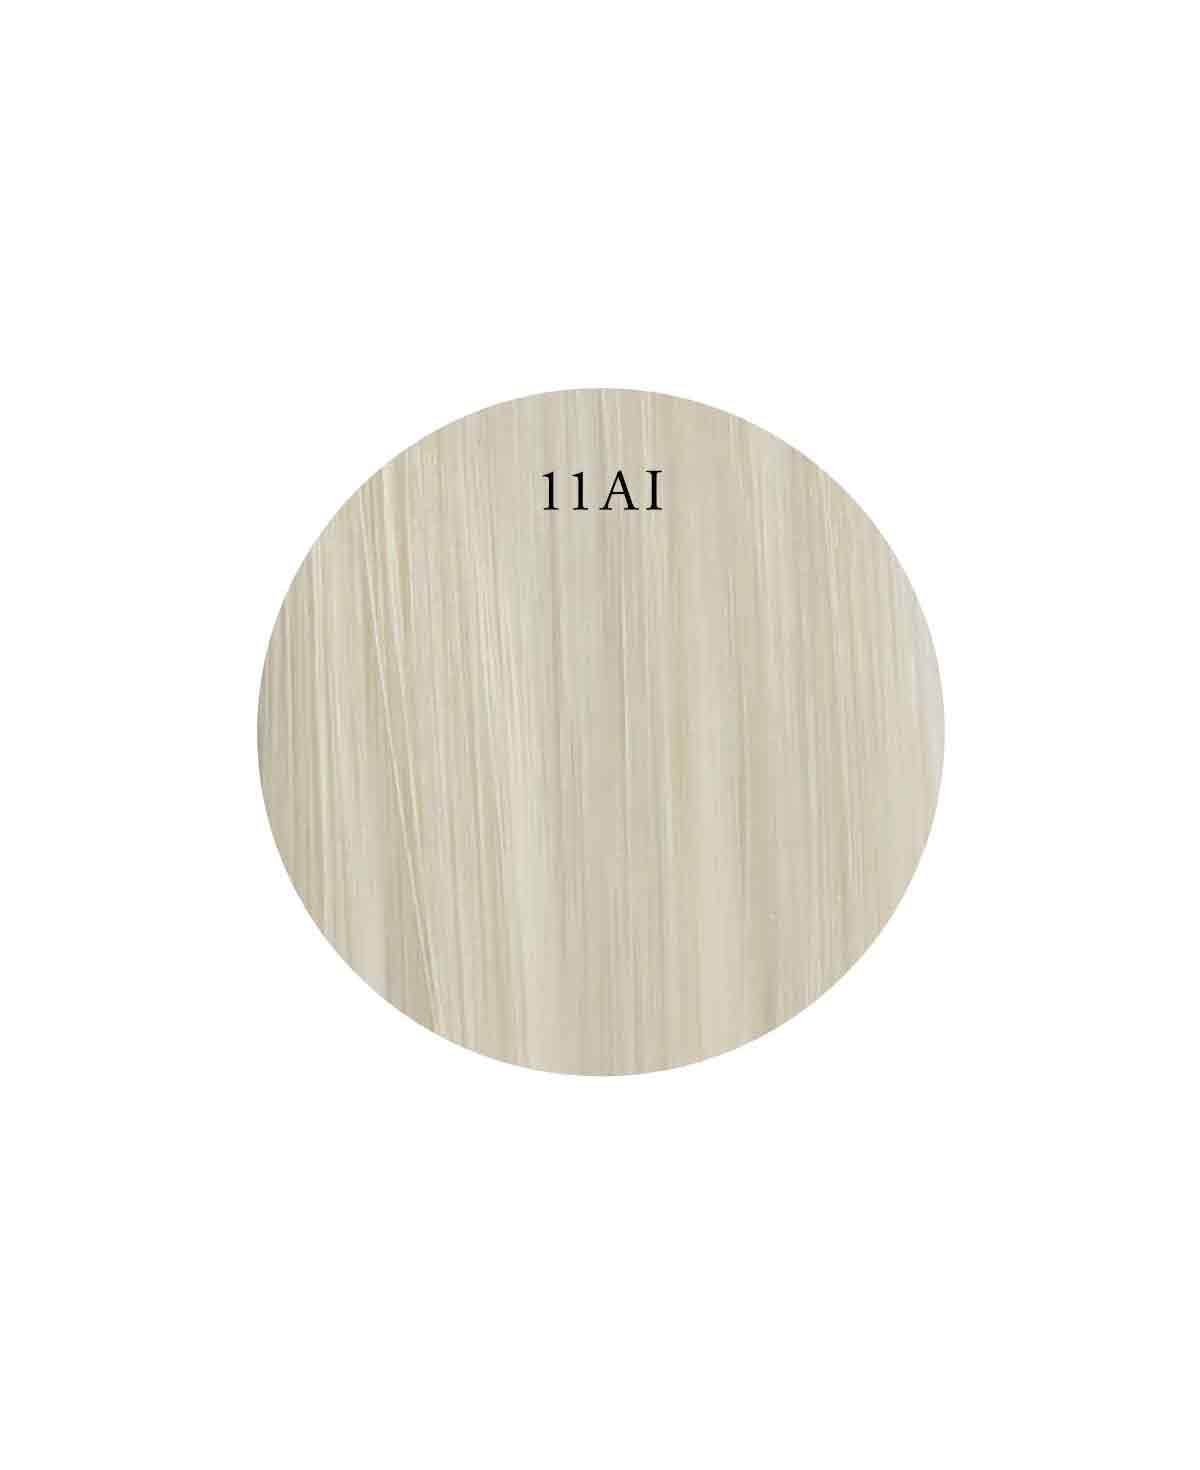 Showpony 45-50cm (20") Slim Tape Extensions - White Blonde - 11AI